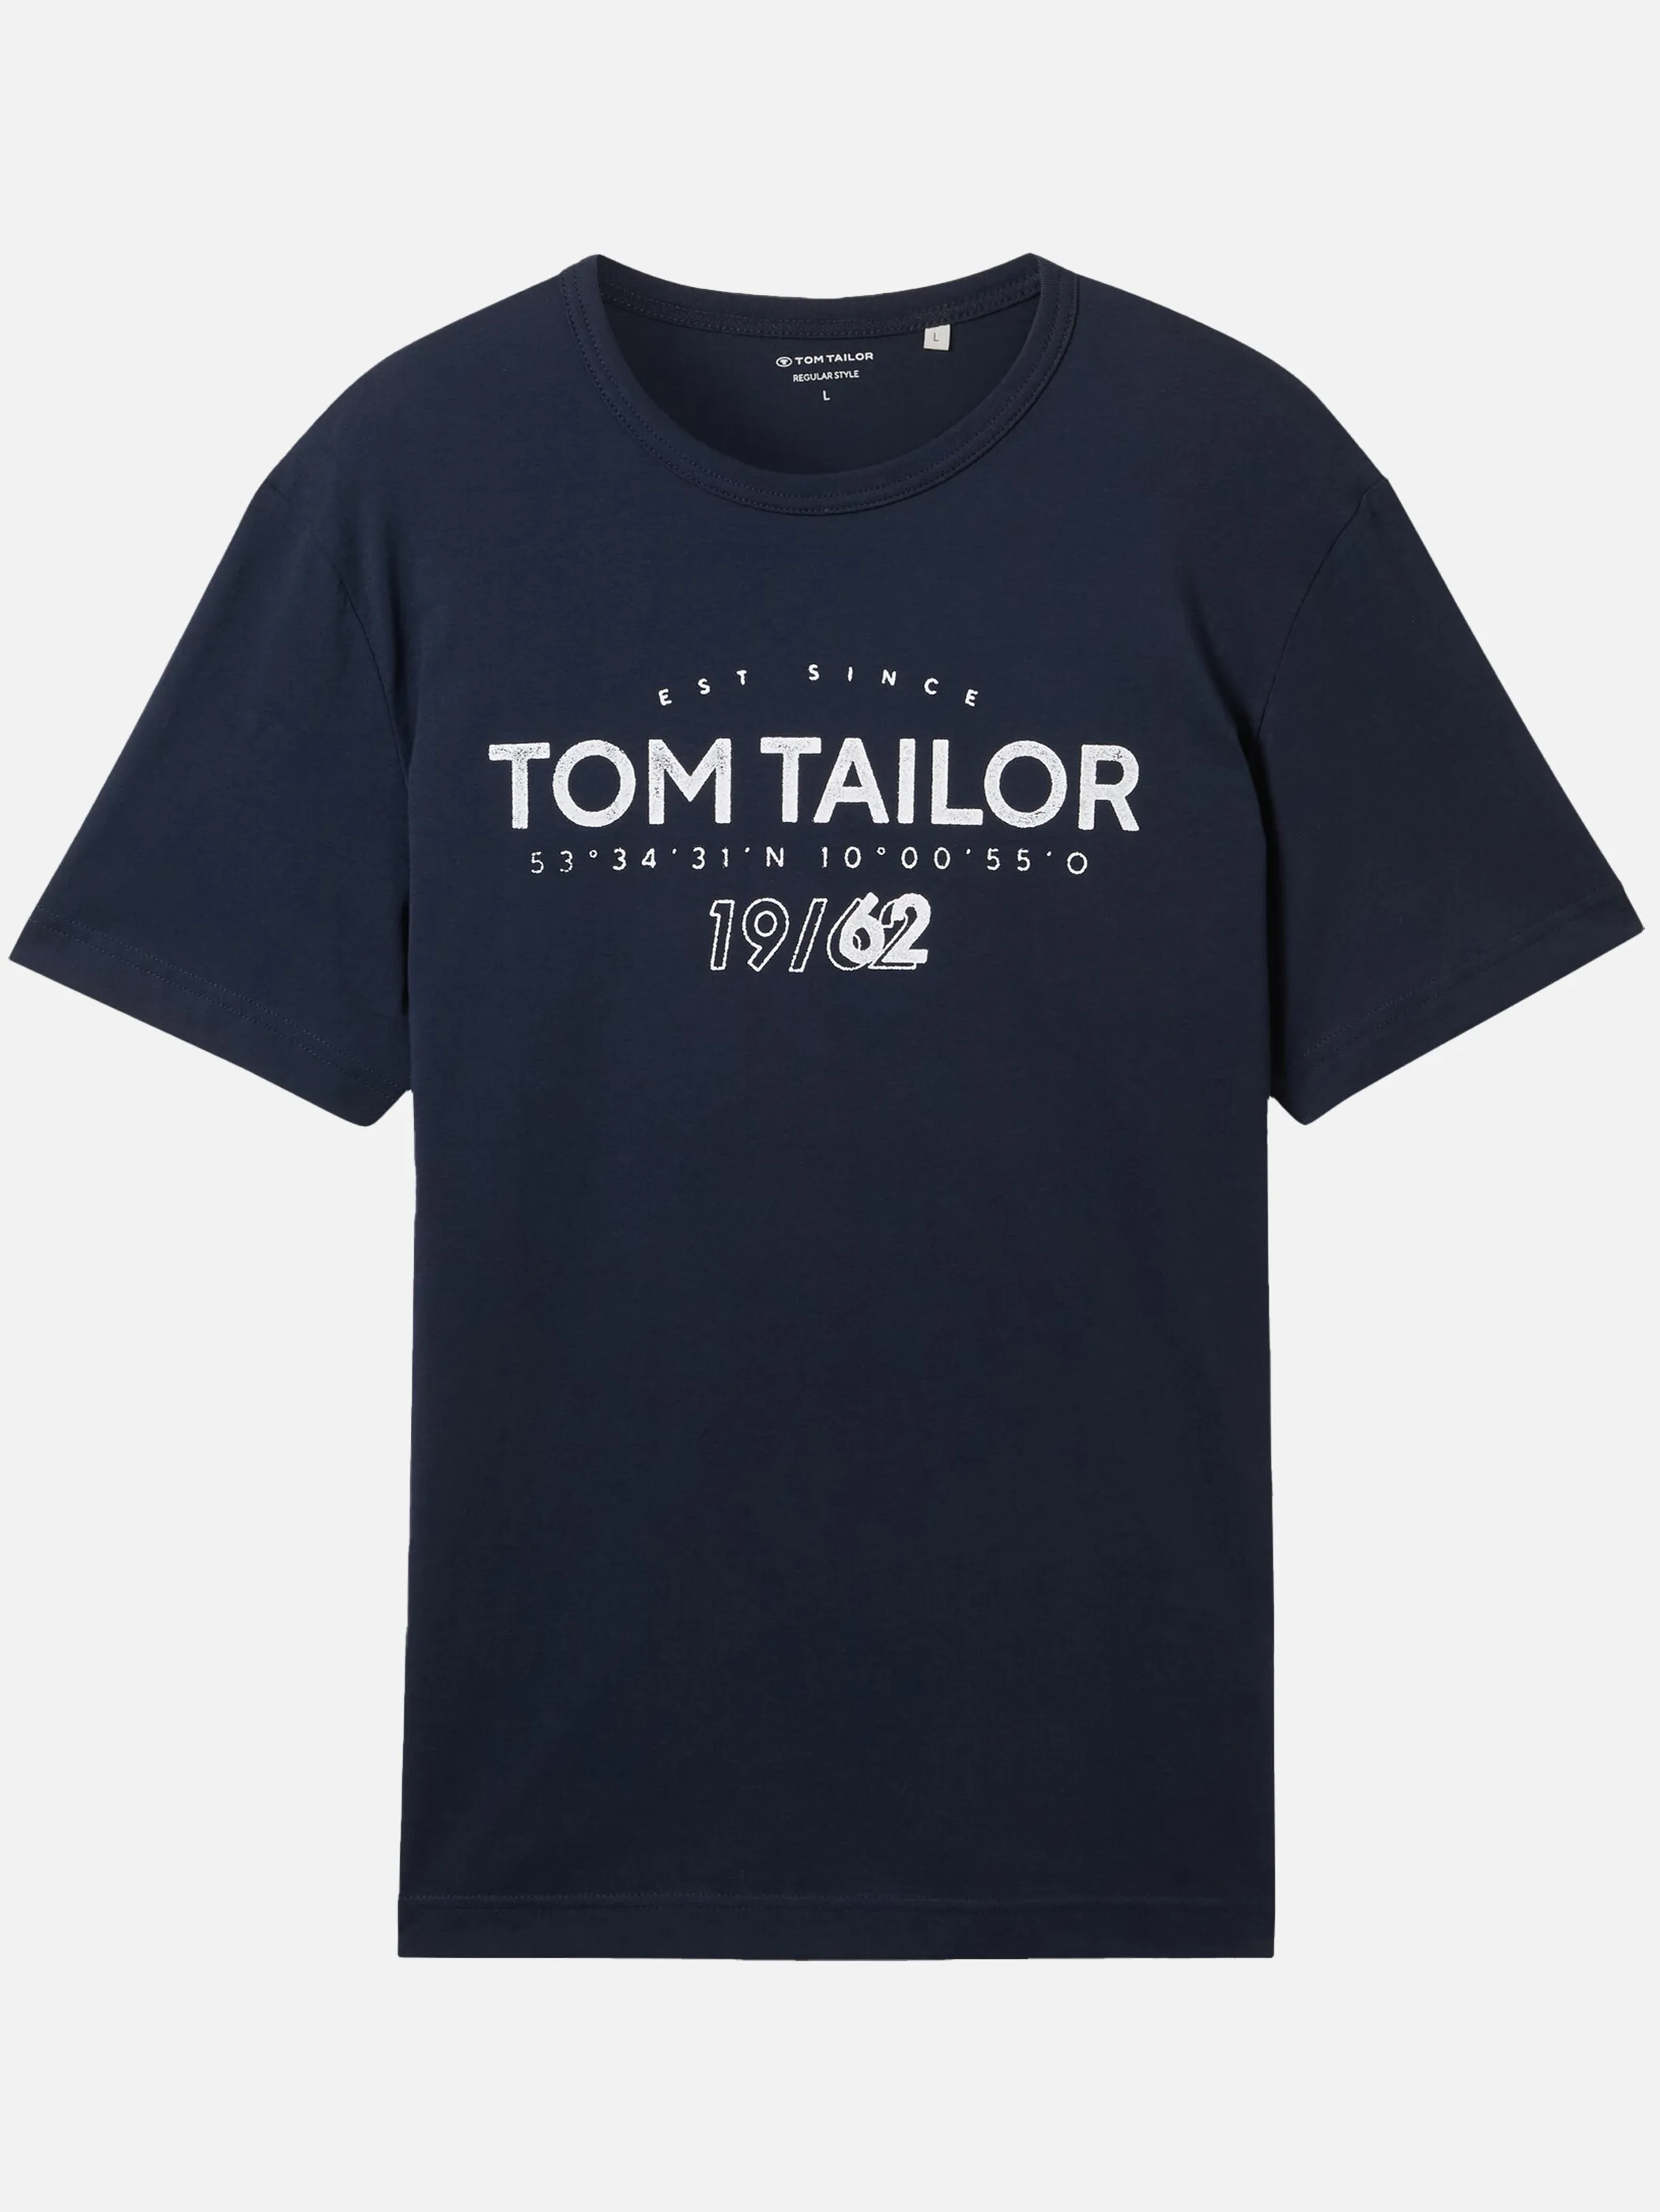 Tom Tailor 1041871 printed t-shirt Blau 895641 10302 1